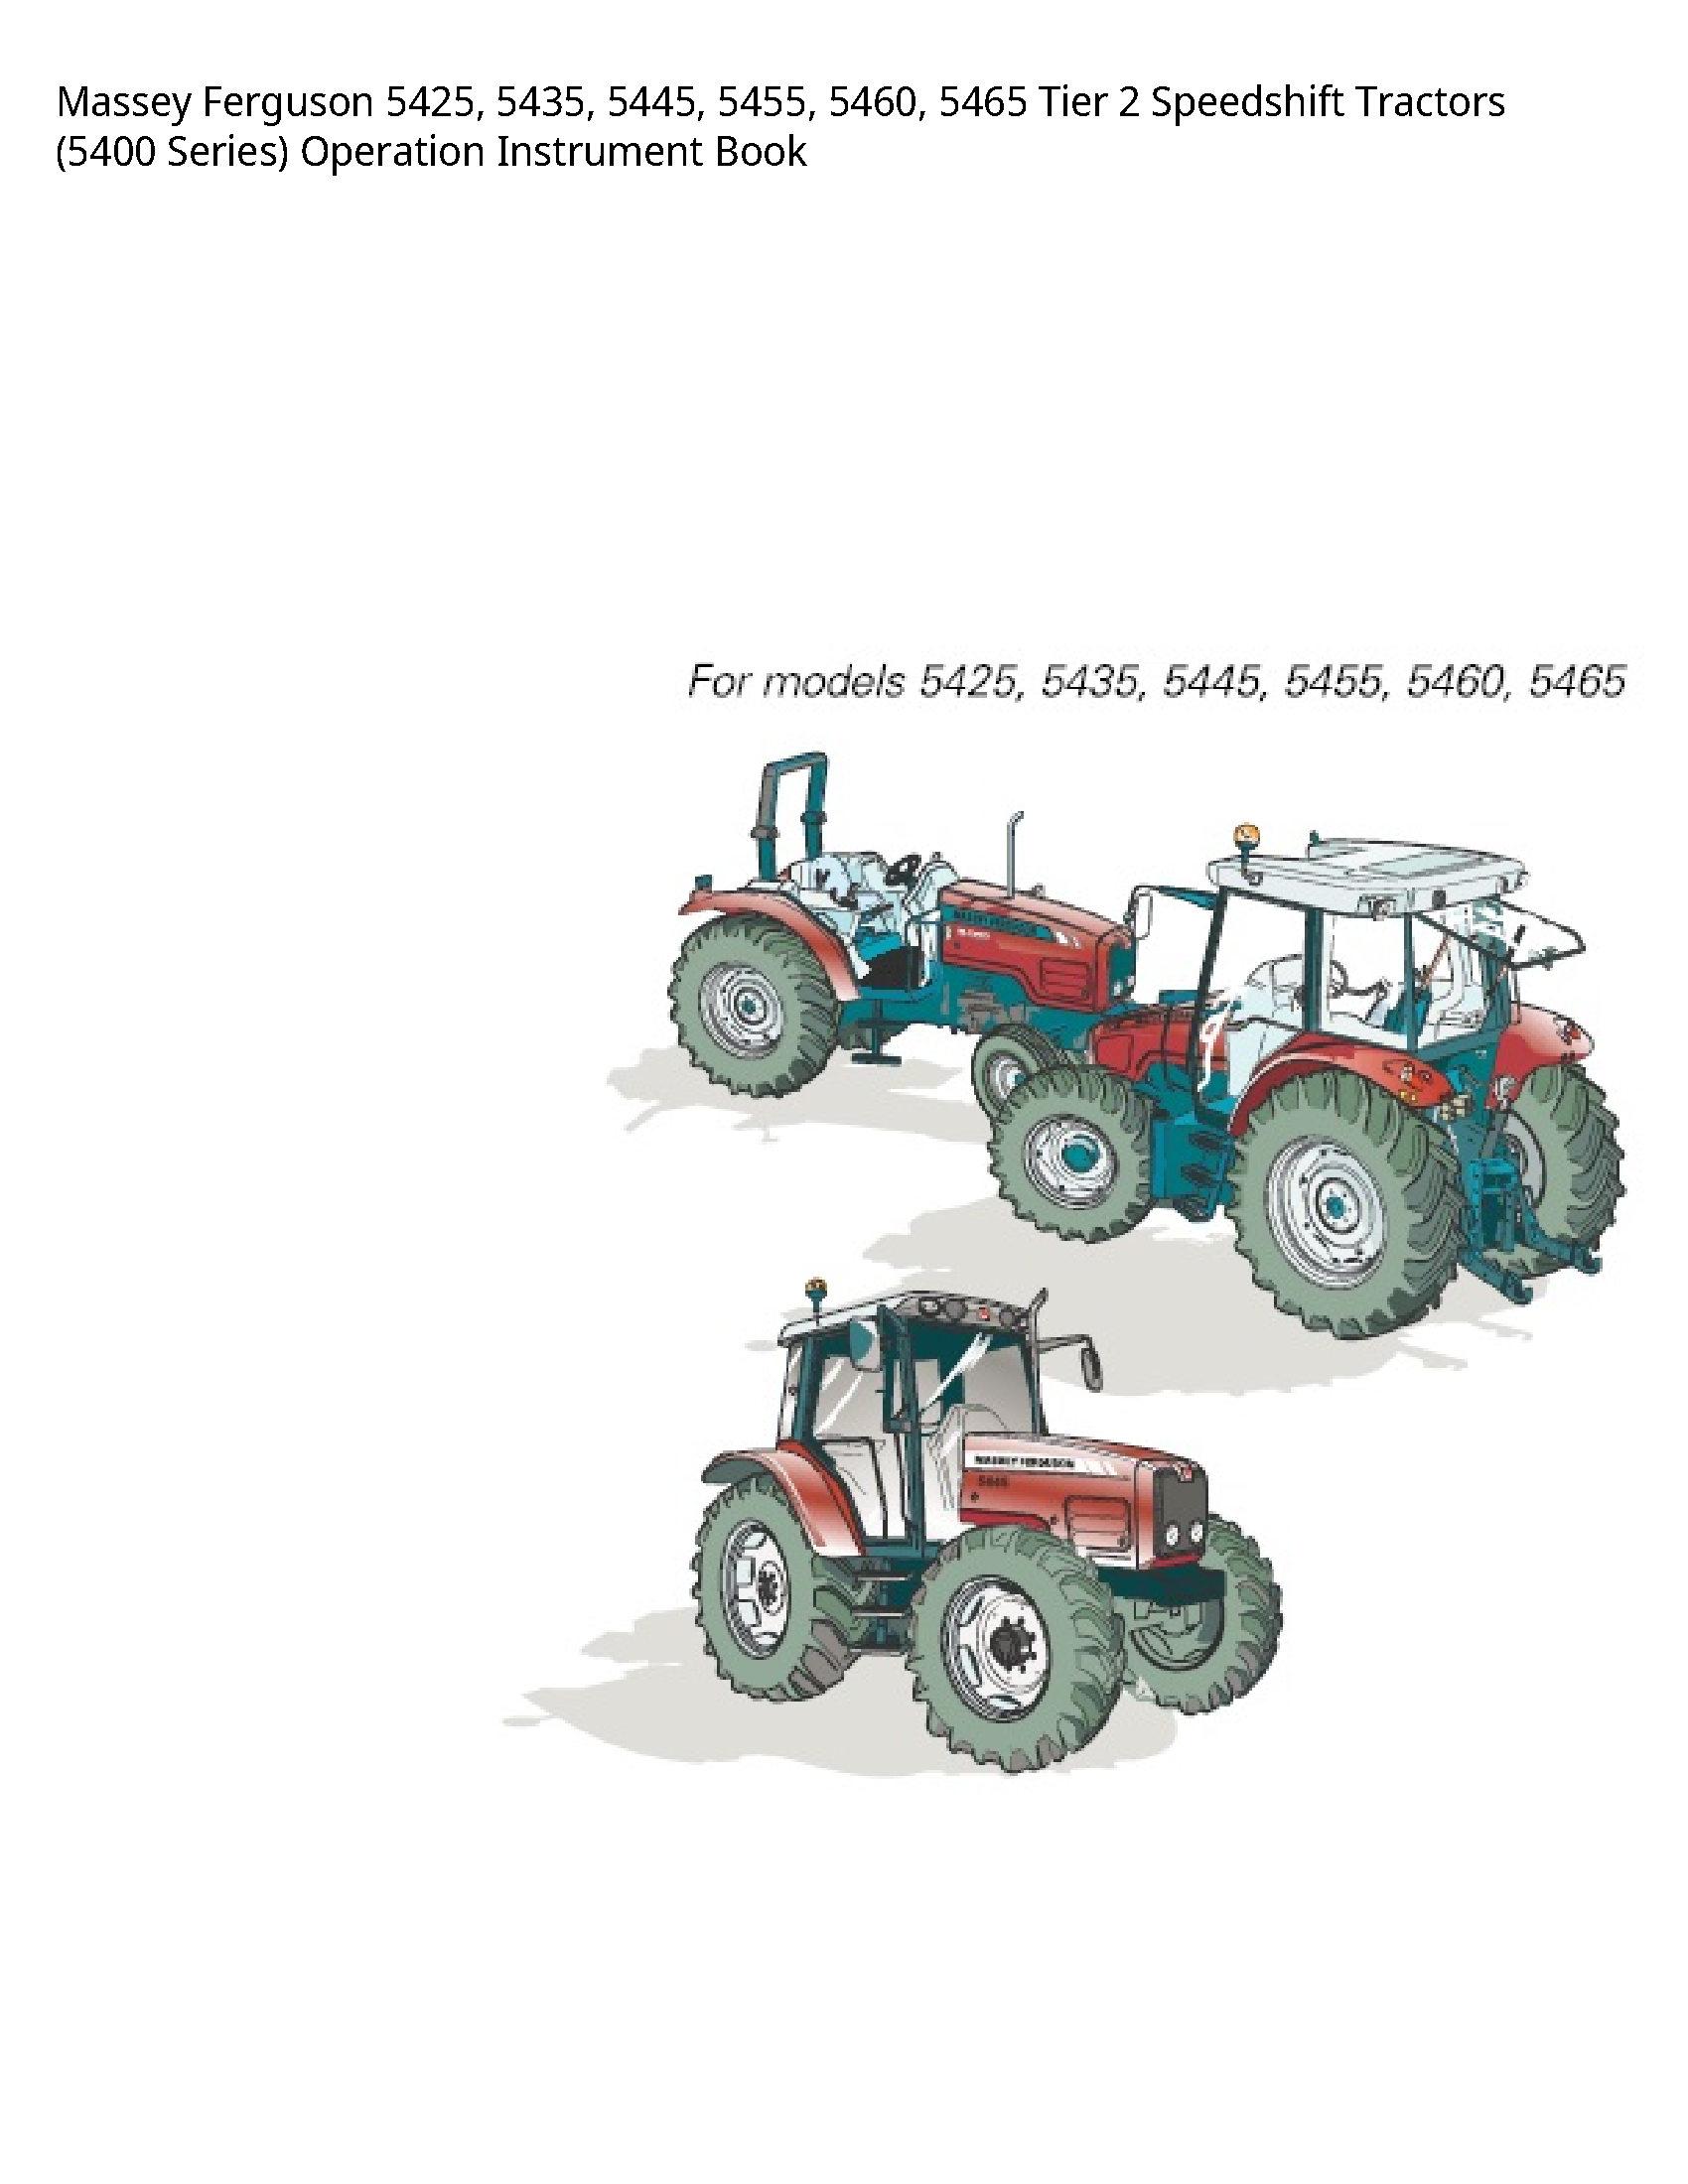 Massey Ferguson 5425 Tier Speedshift Tractors Series) Operation Instrument Book manual